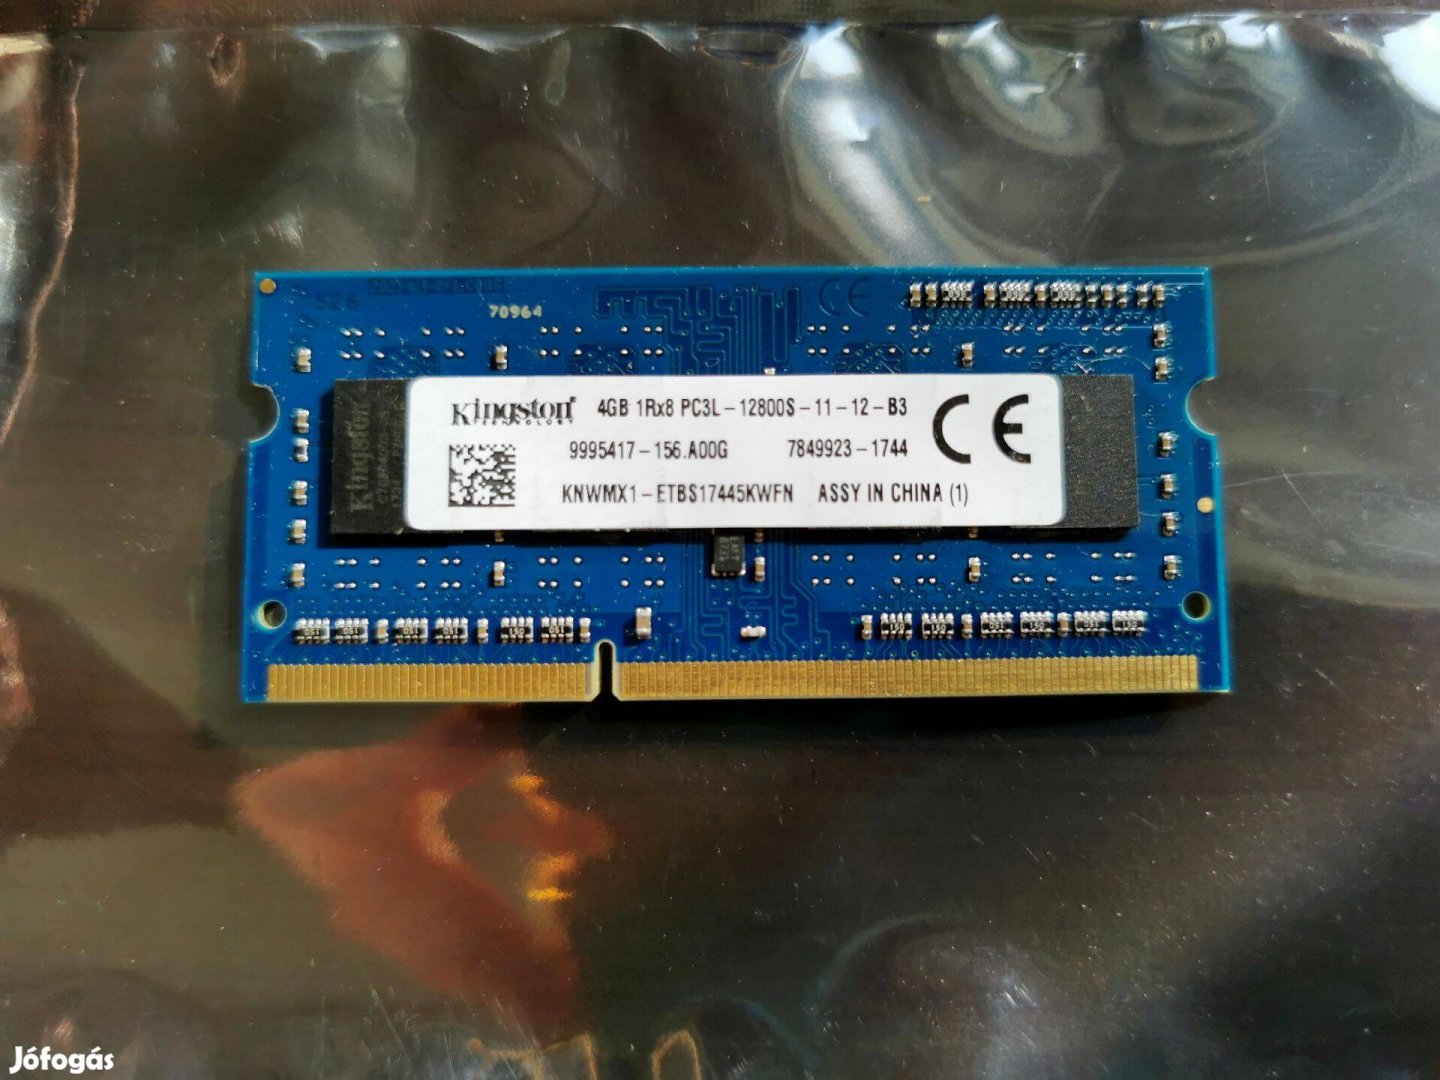 06/1 Kingston Knwmx1-ETB 4gb 3 hónap garancia PC3L DDR3 ram memória